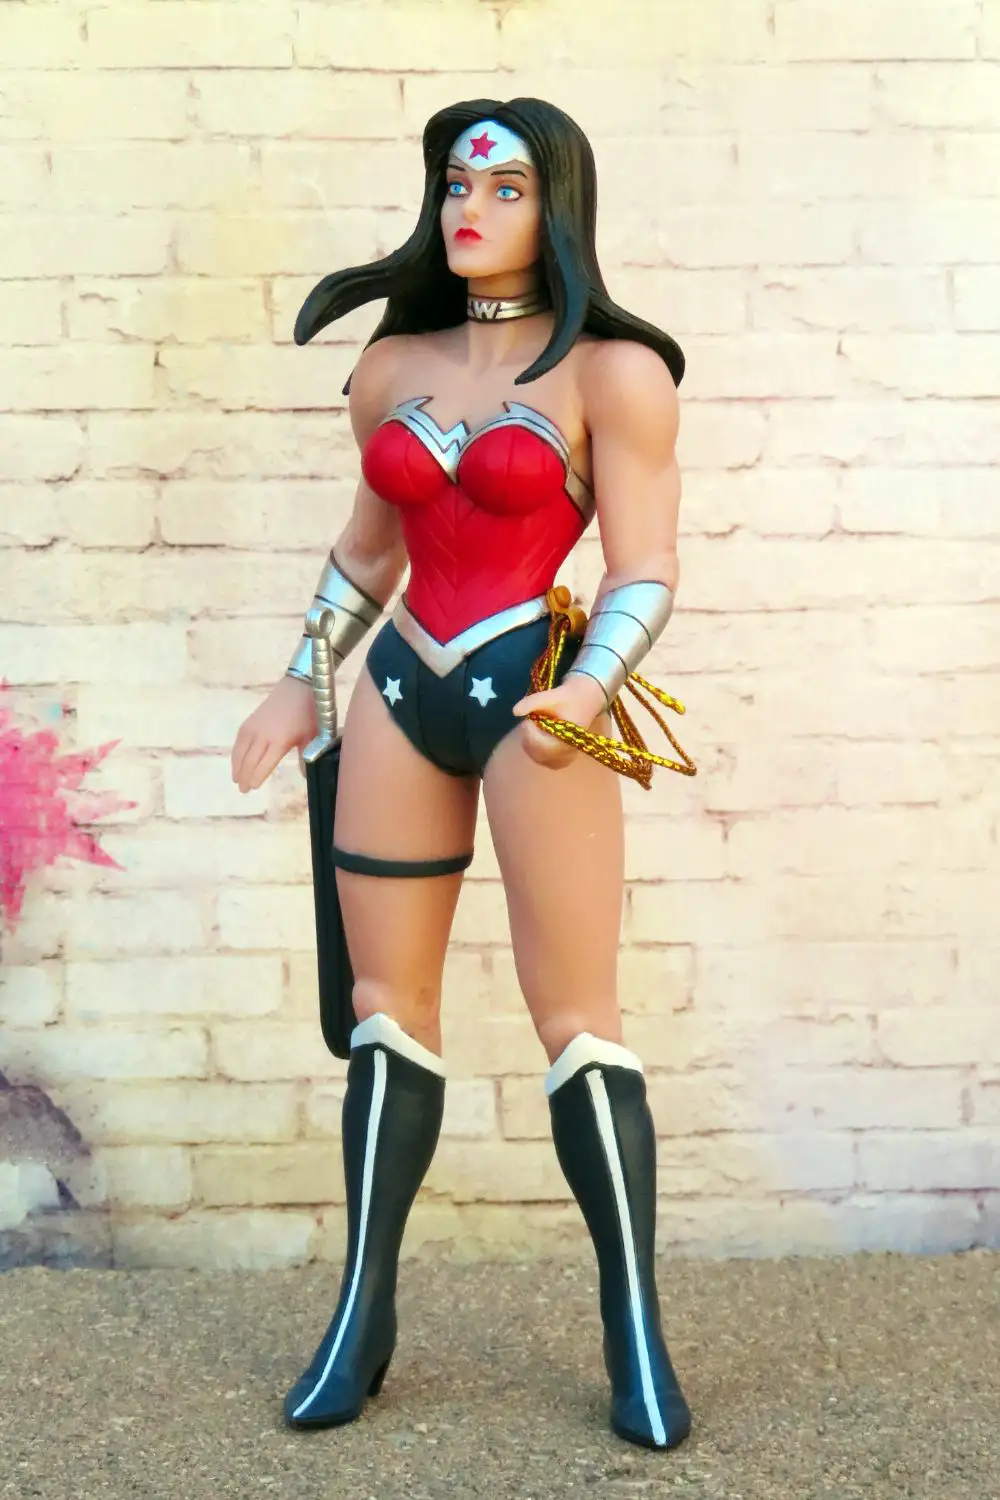 Female superhero wearing skimpy outfit